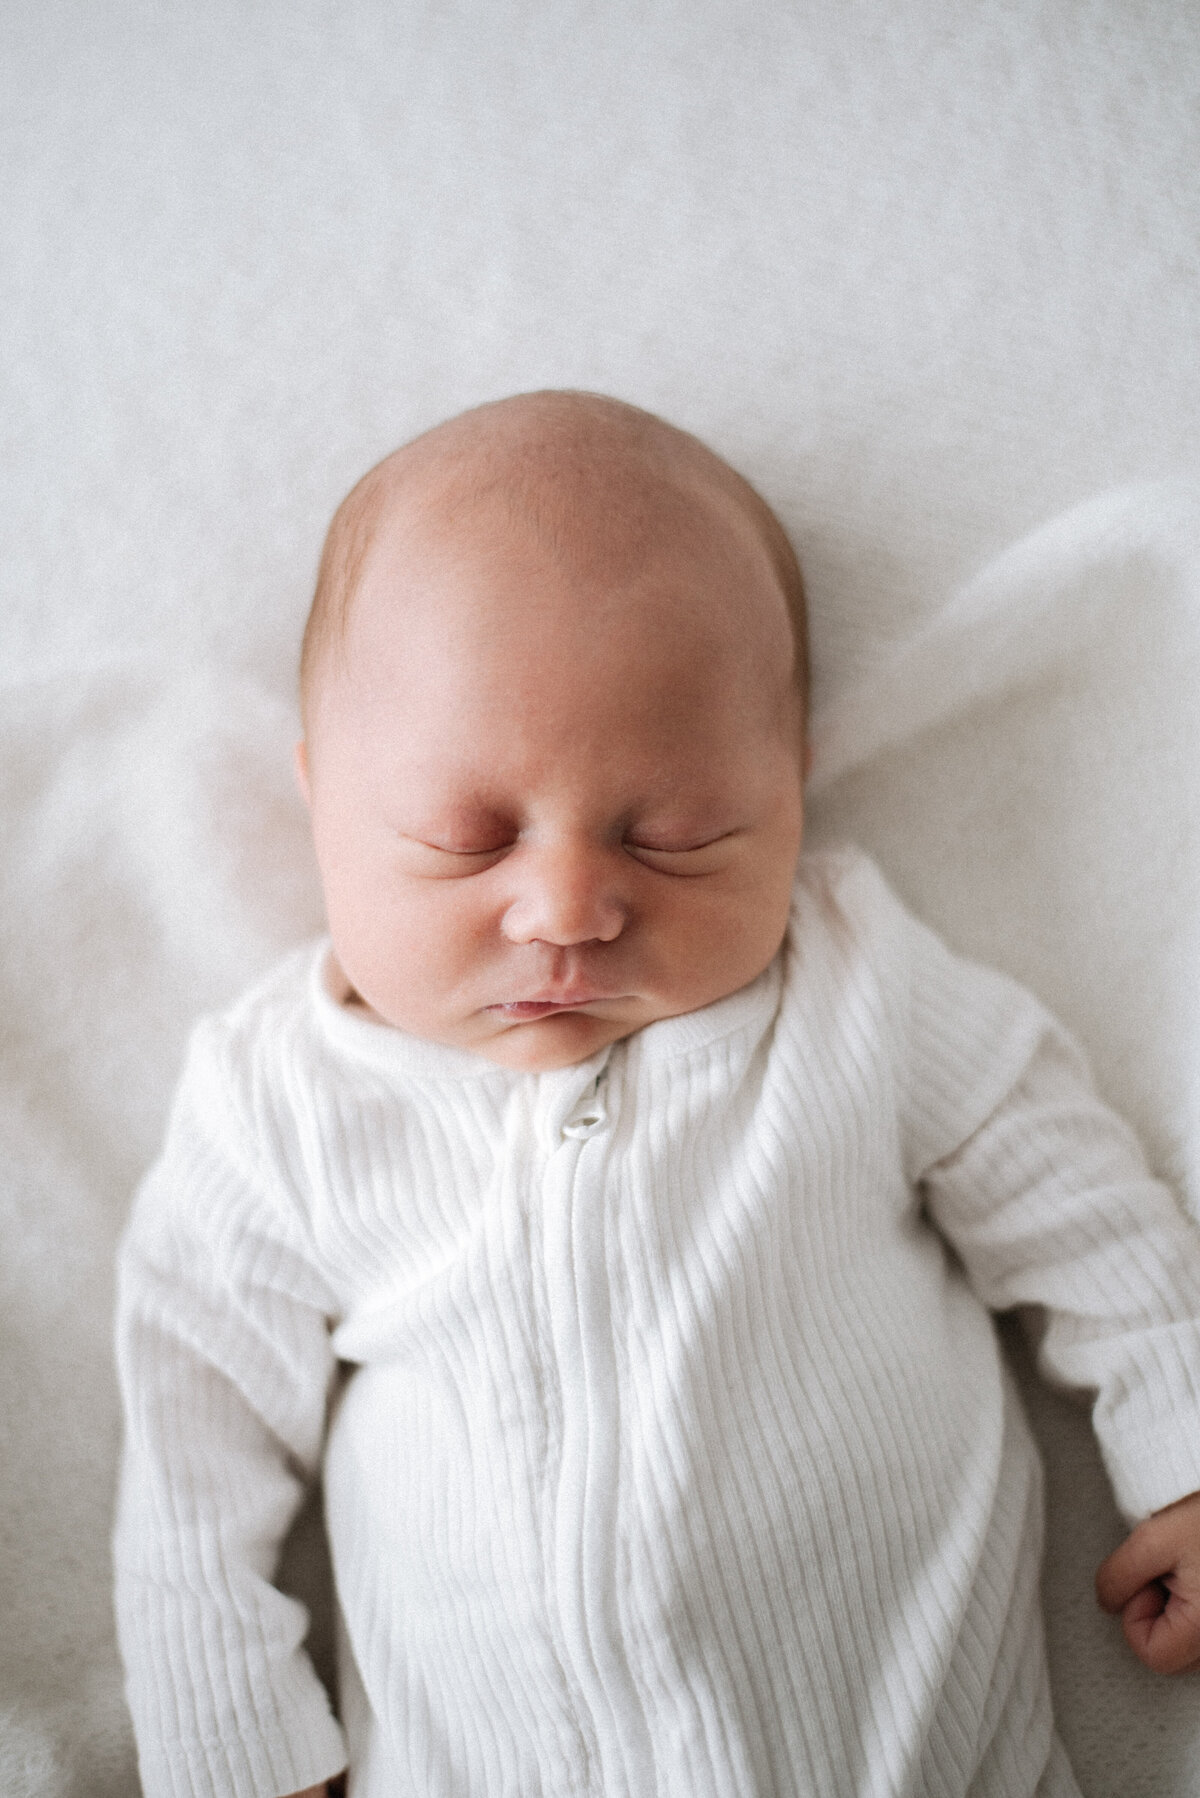 Baby boy sleeping in a white baby grow on a white blanket at billngshurst newborn photoshoot